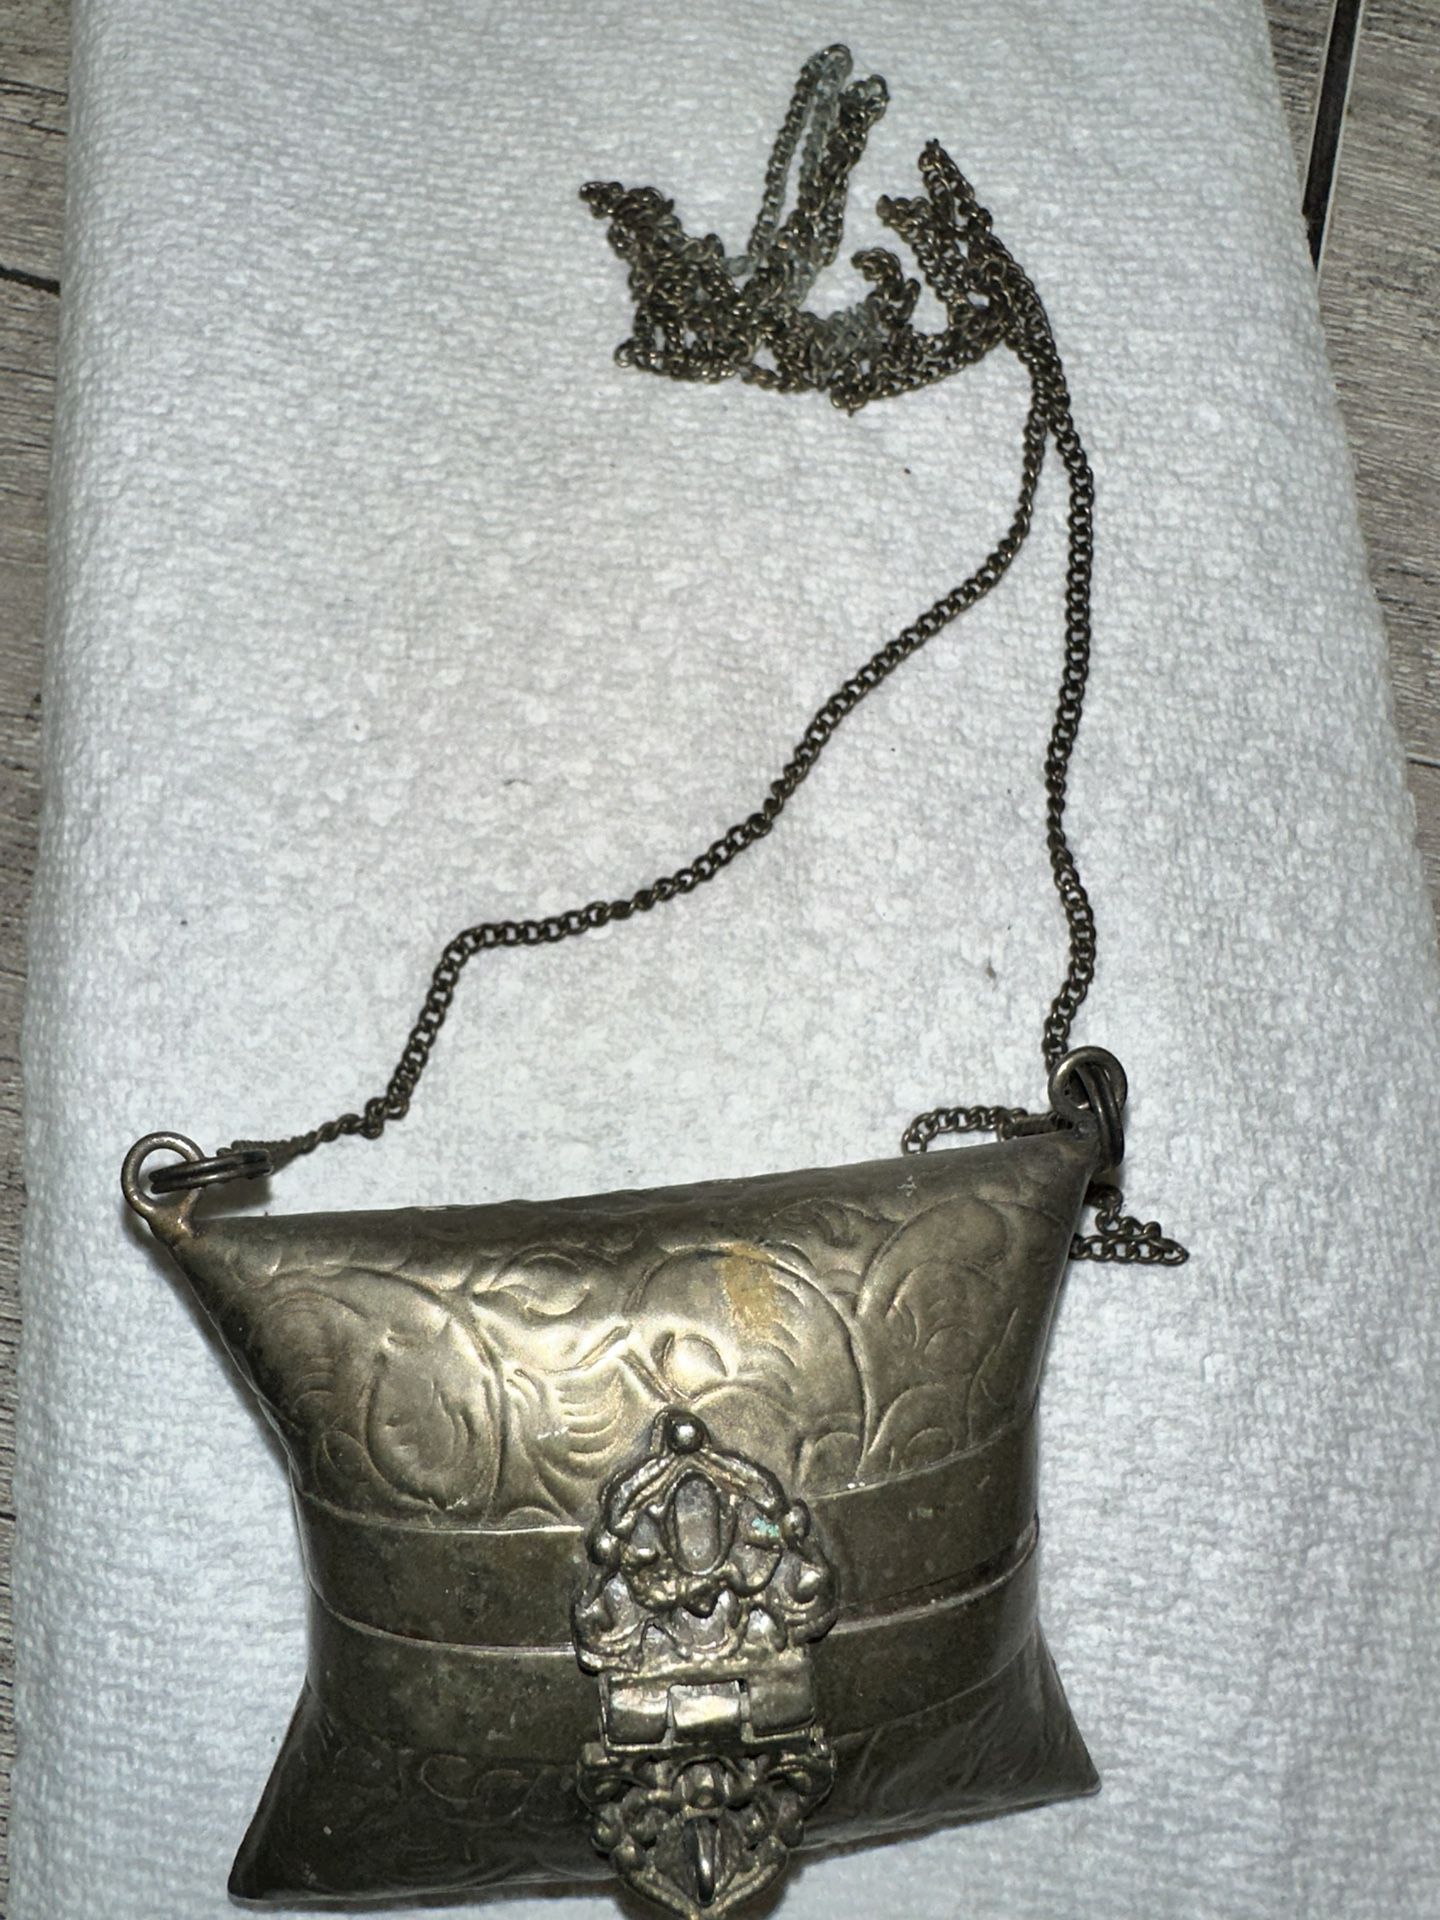 VTG antique Silver Necklace Pendant Locket Pocket Chain